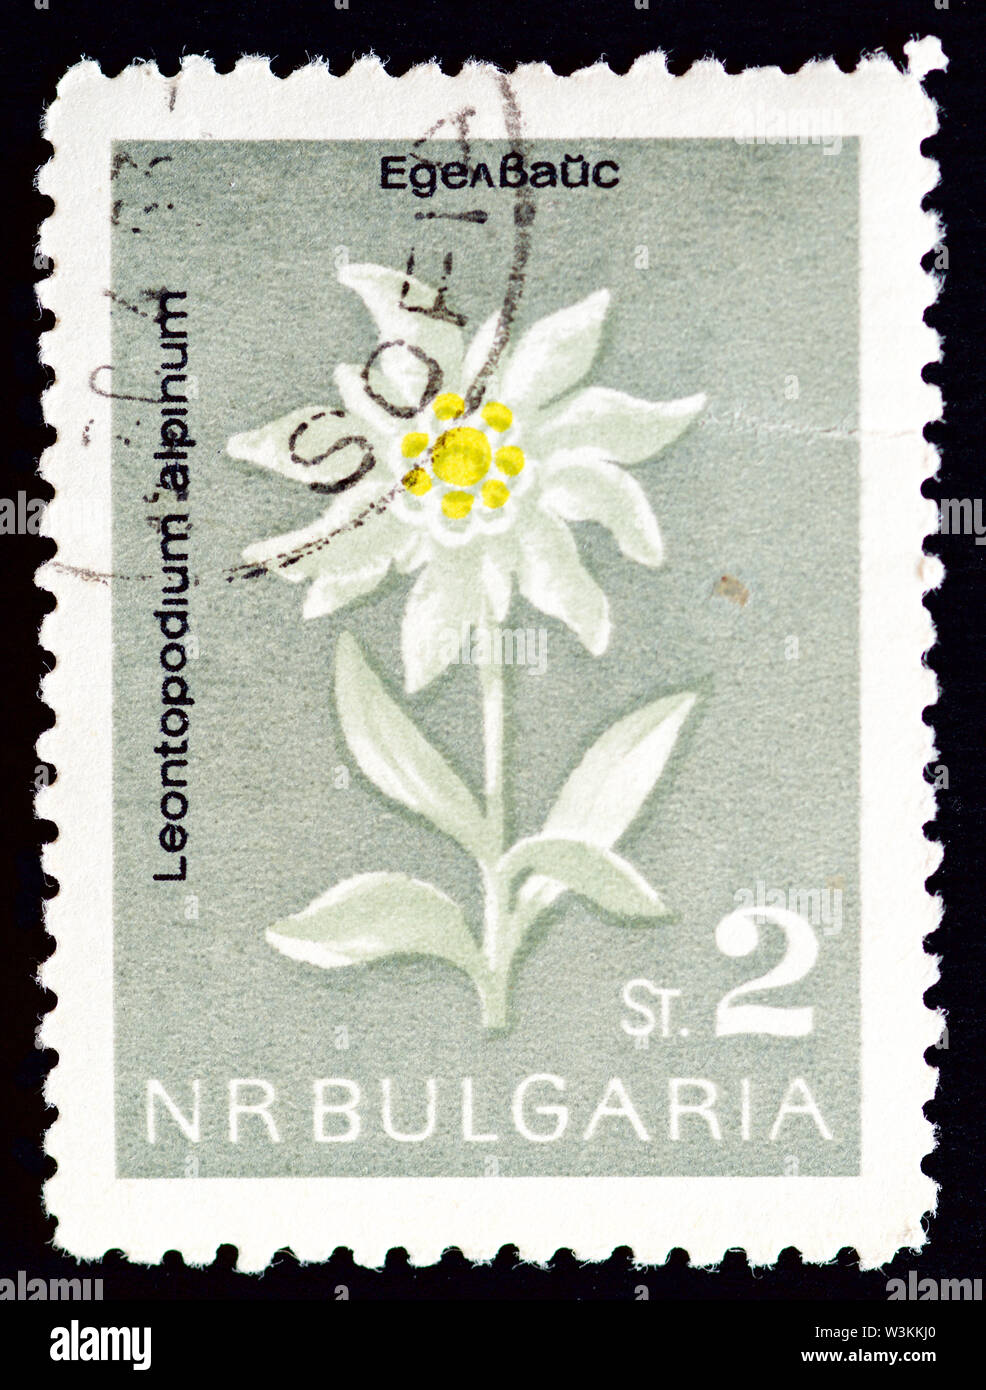 Bulgaria Postage Stamp - 1963 Stock Photo